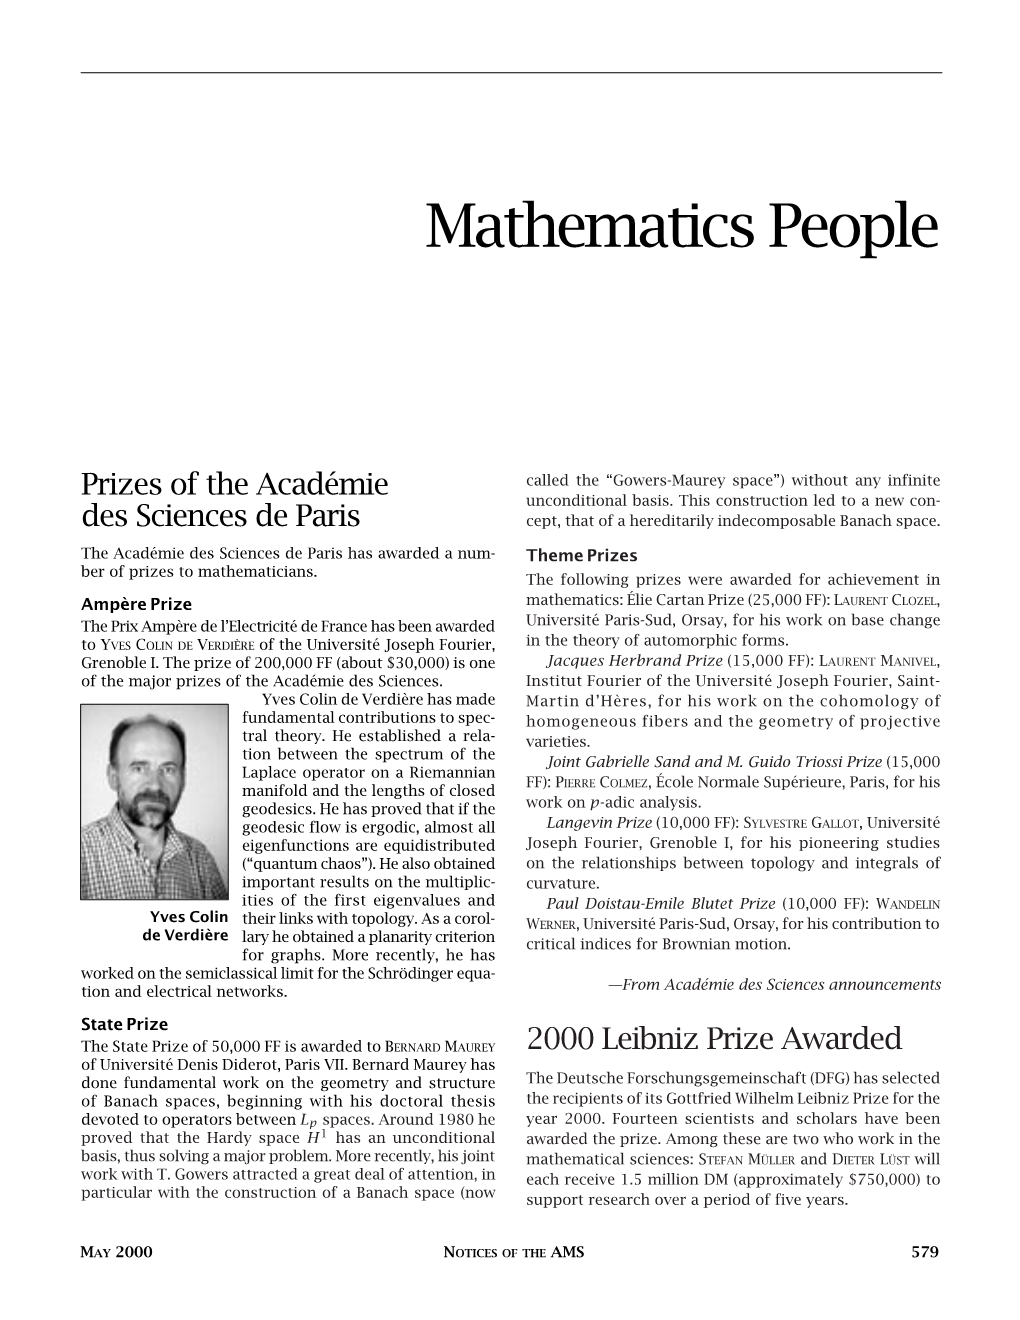 Mathematics People, Volume 47, Number 5